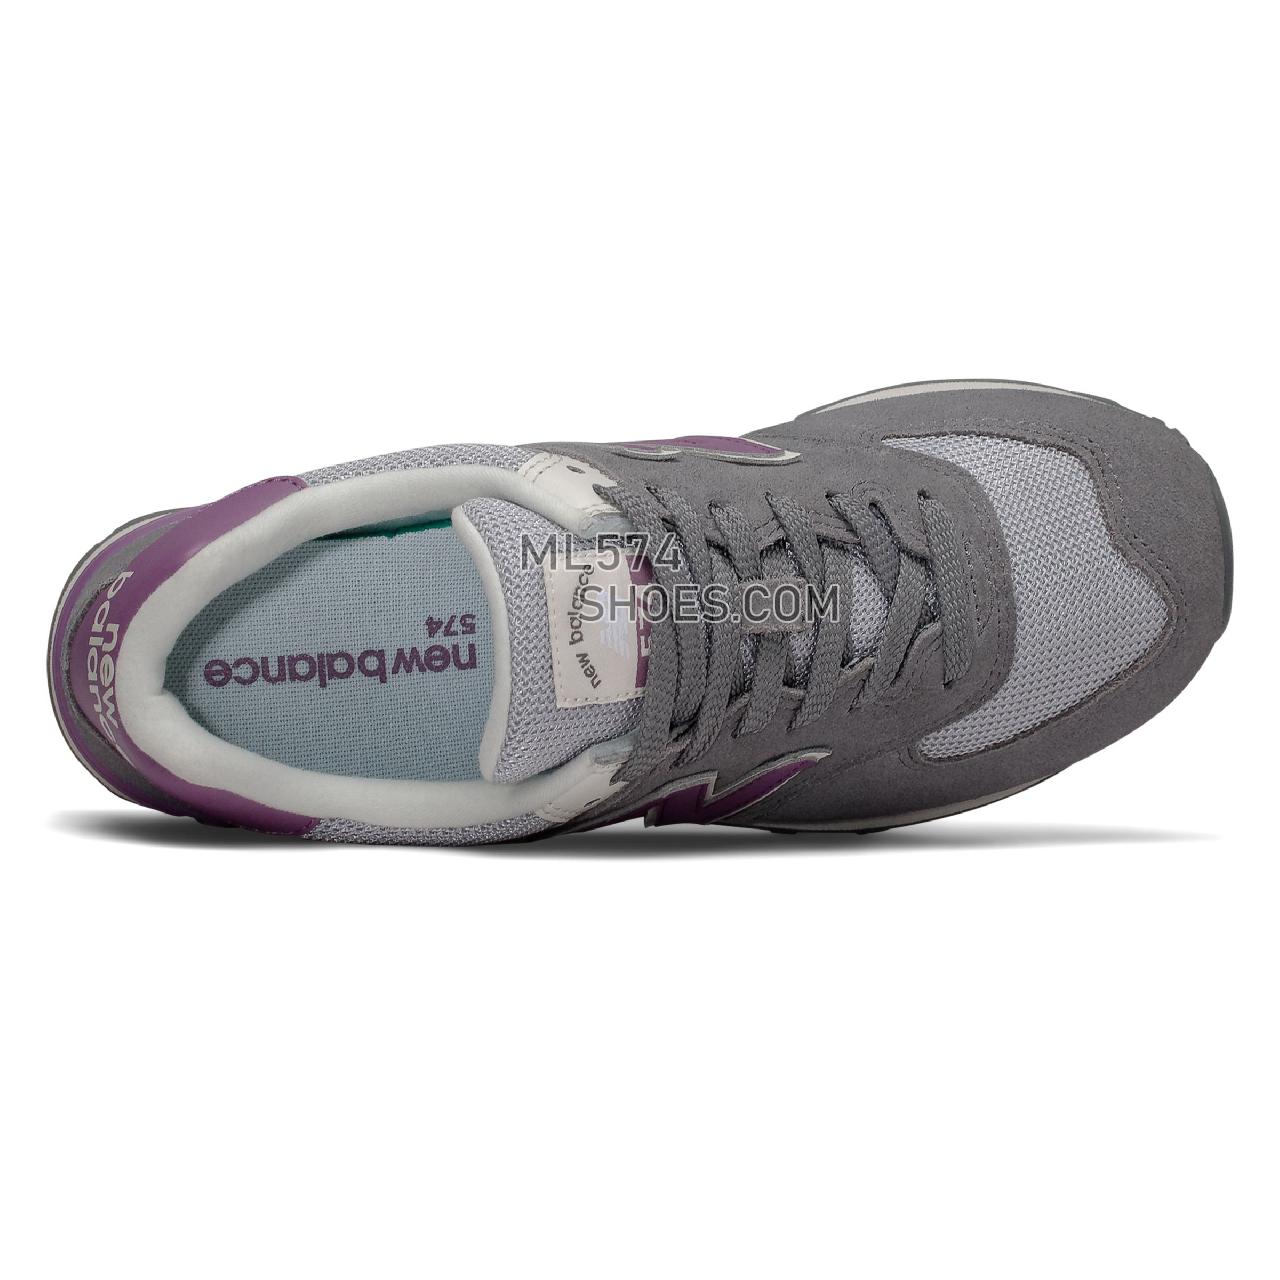 New Balance 574 - Women's Classic Sneakers - Castlerock with Kite Purple - WL574LDB